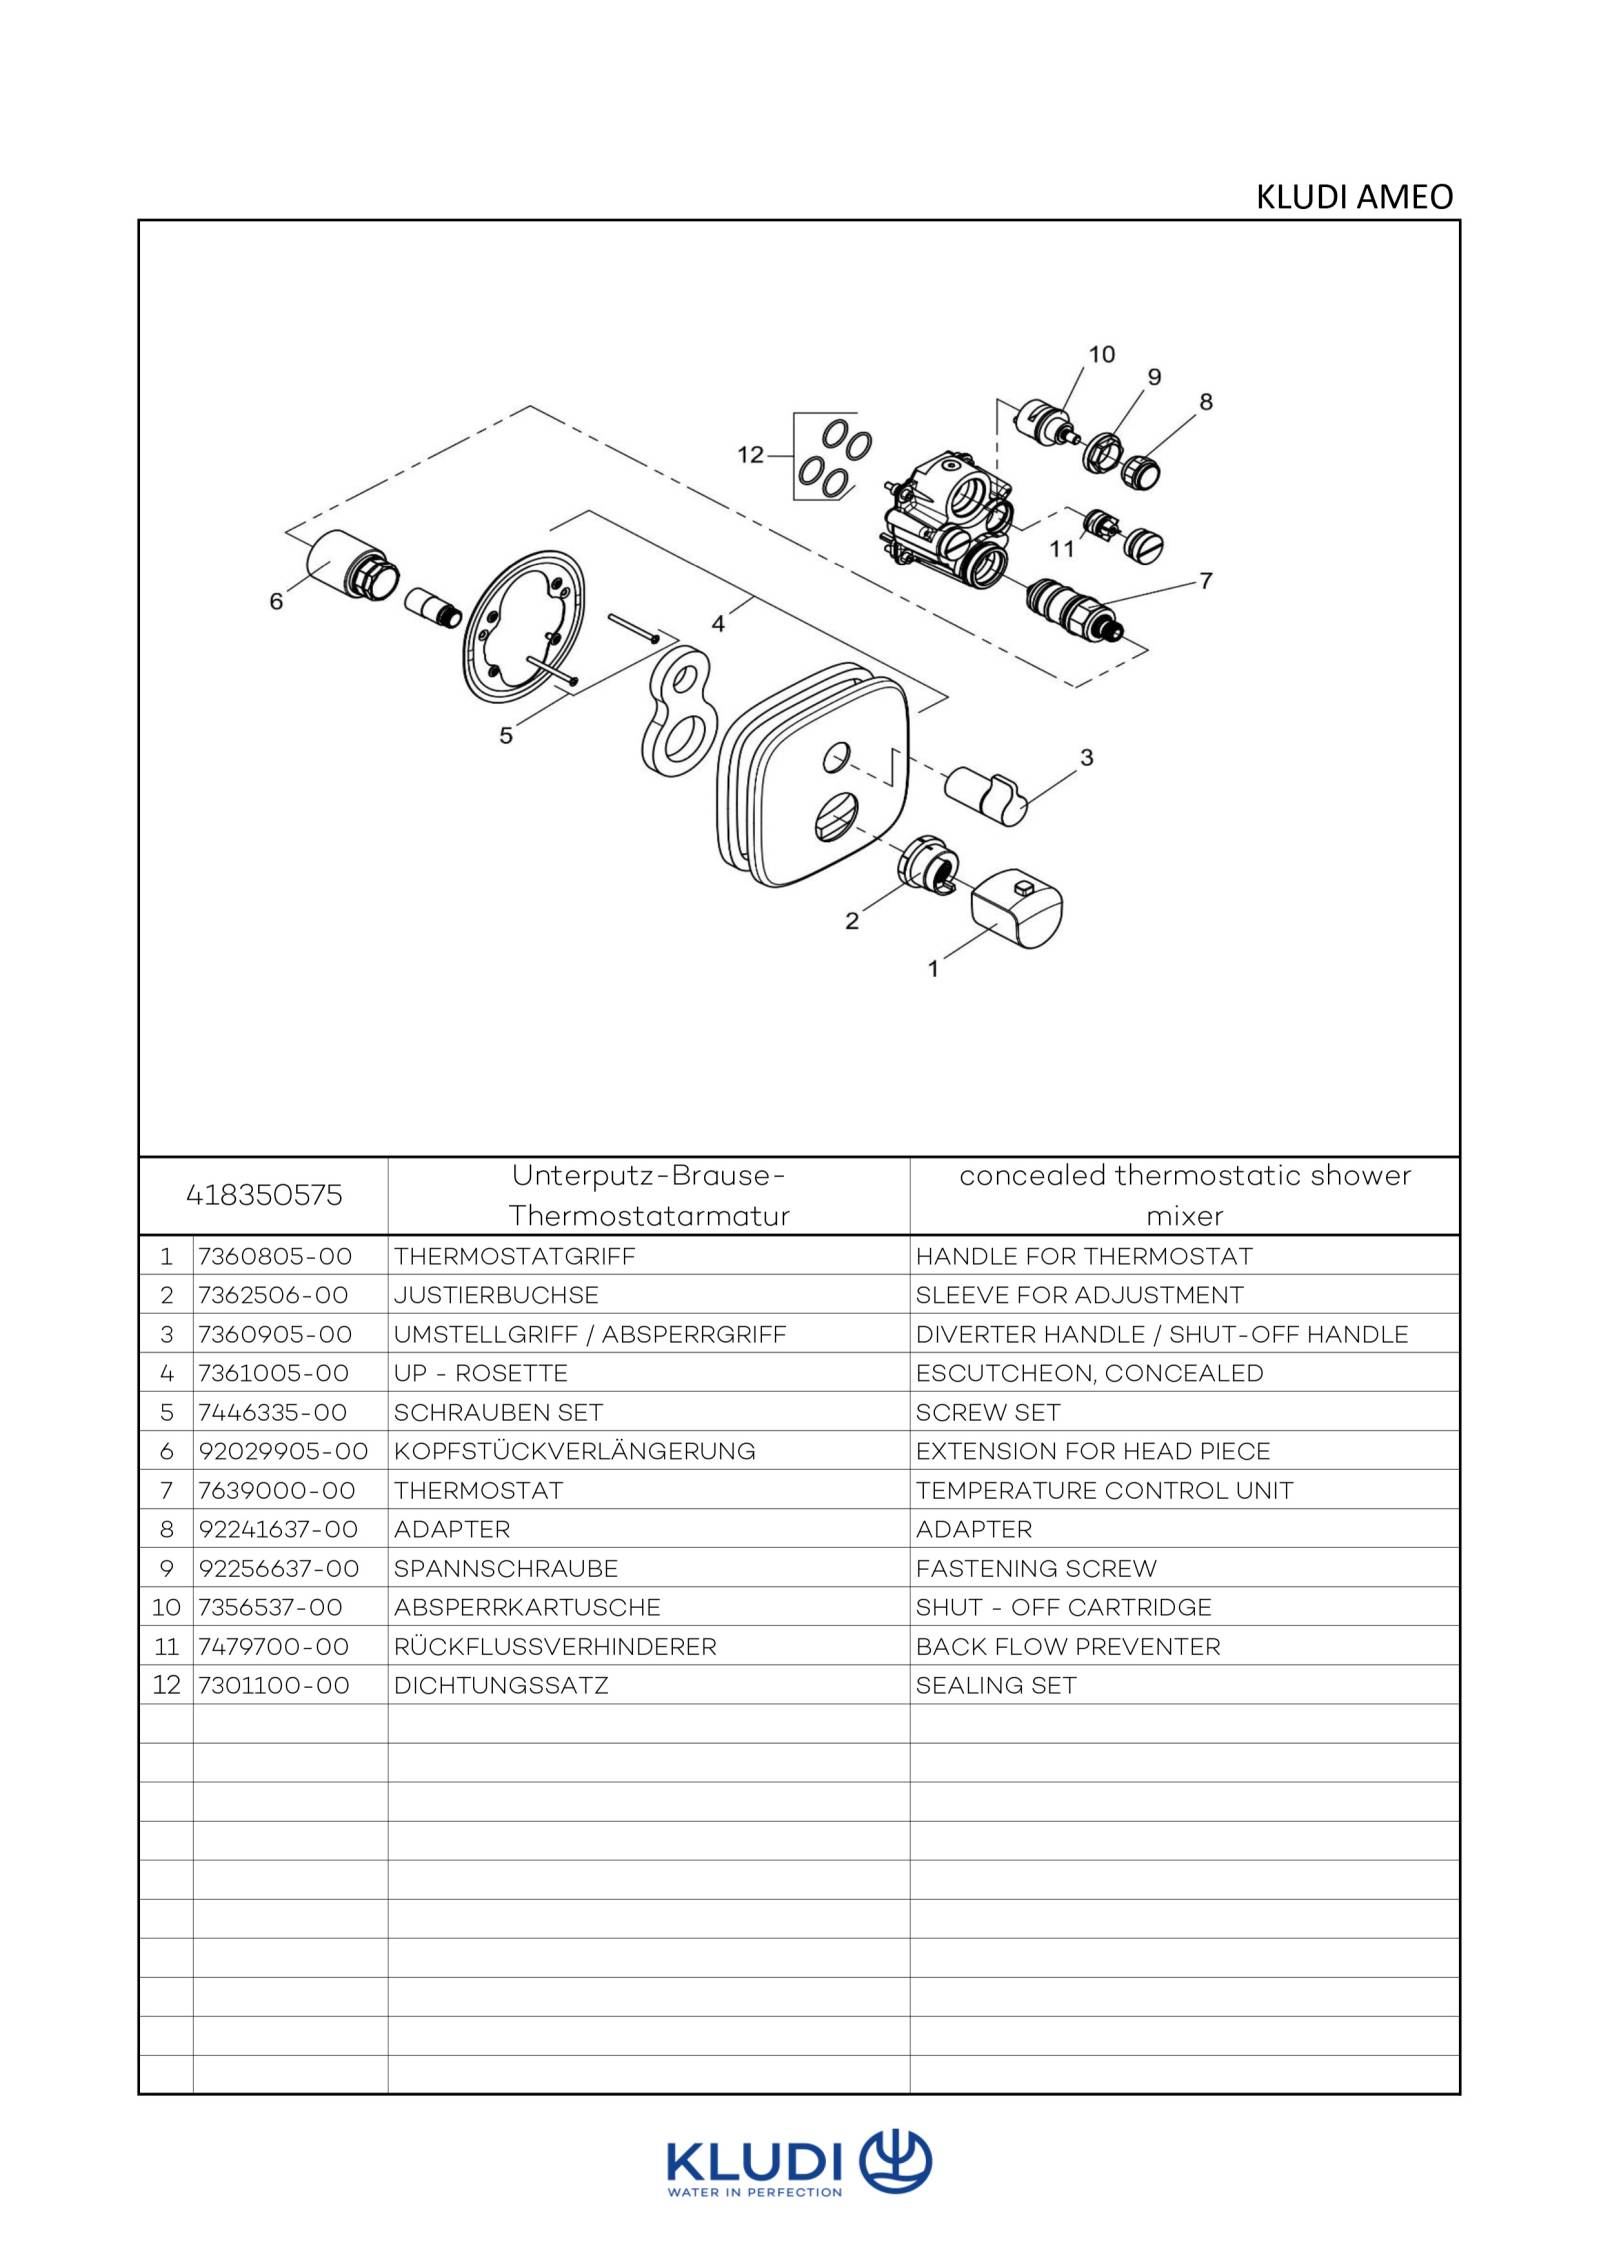 KLUDI AMEO Unterputz-Thermostatarmatur Feinbau-Set mit Absperrventil chrom